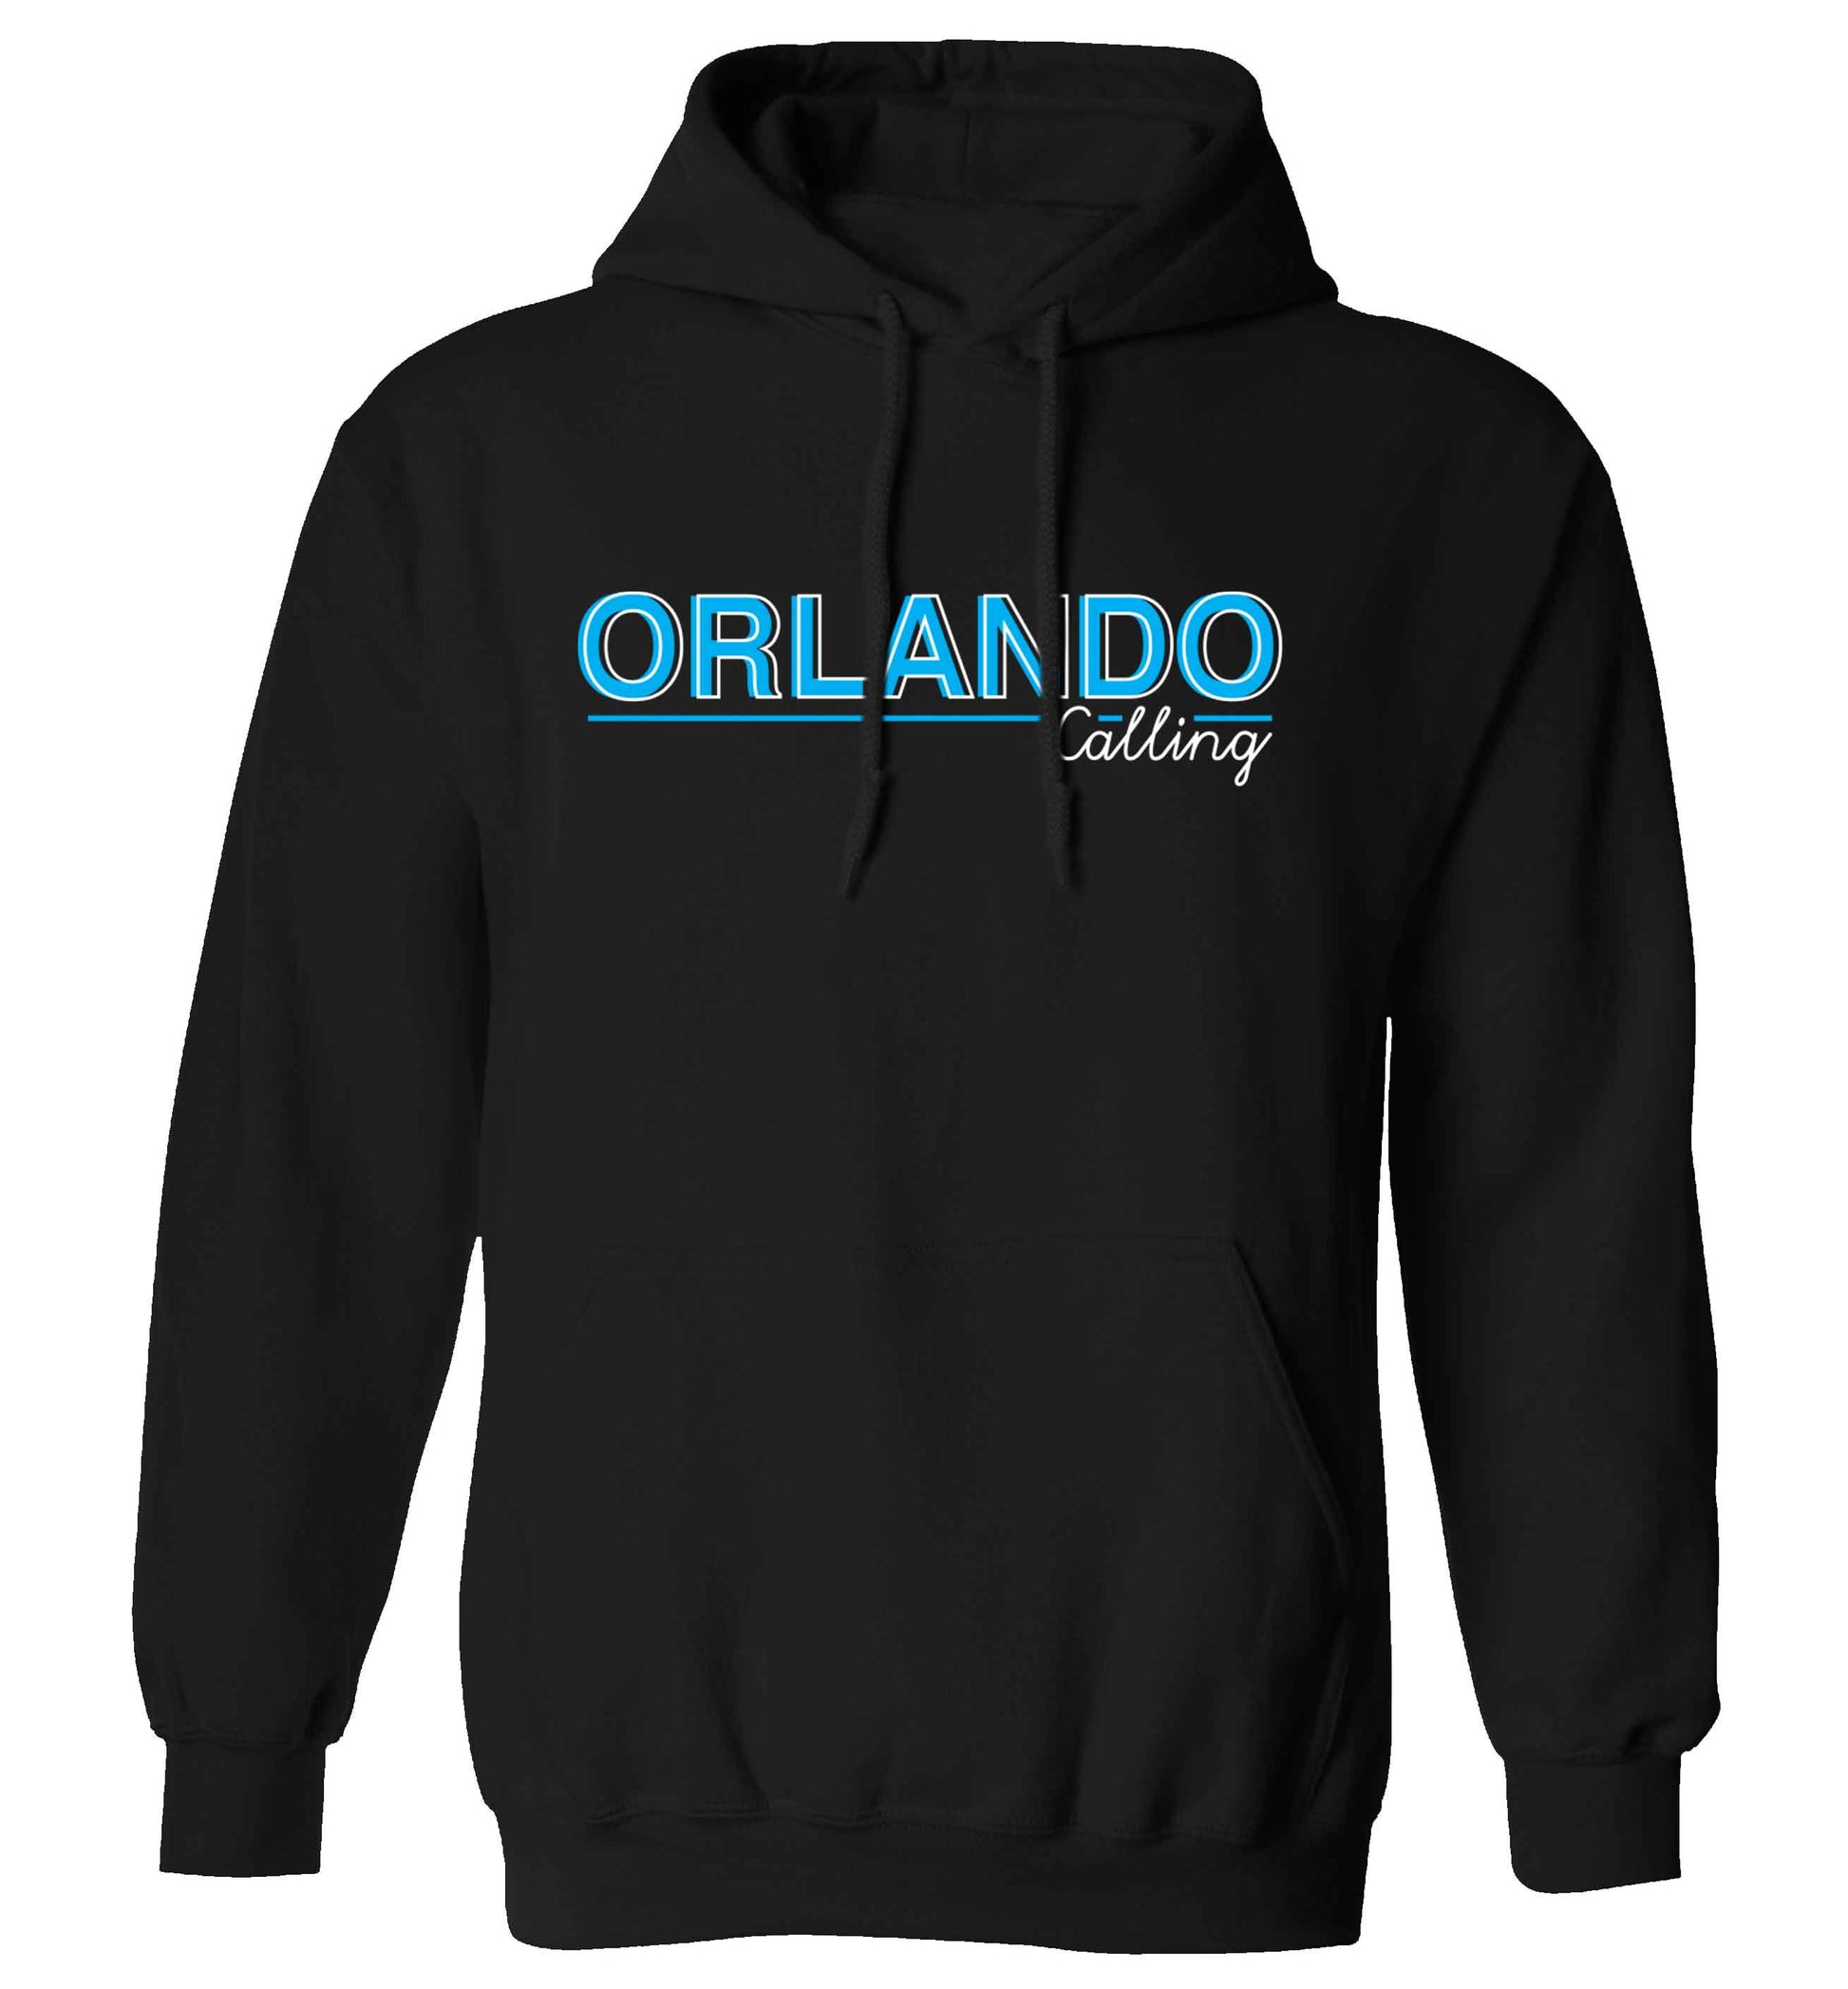 Orlando calling adults unisex black hoodie 2XL